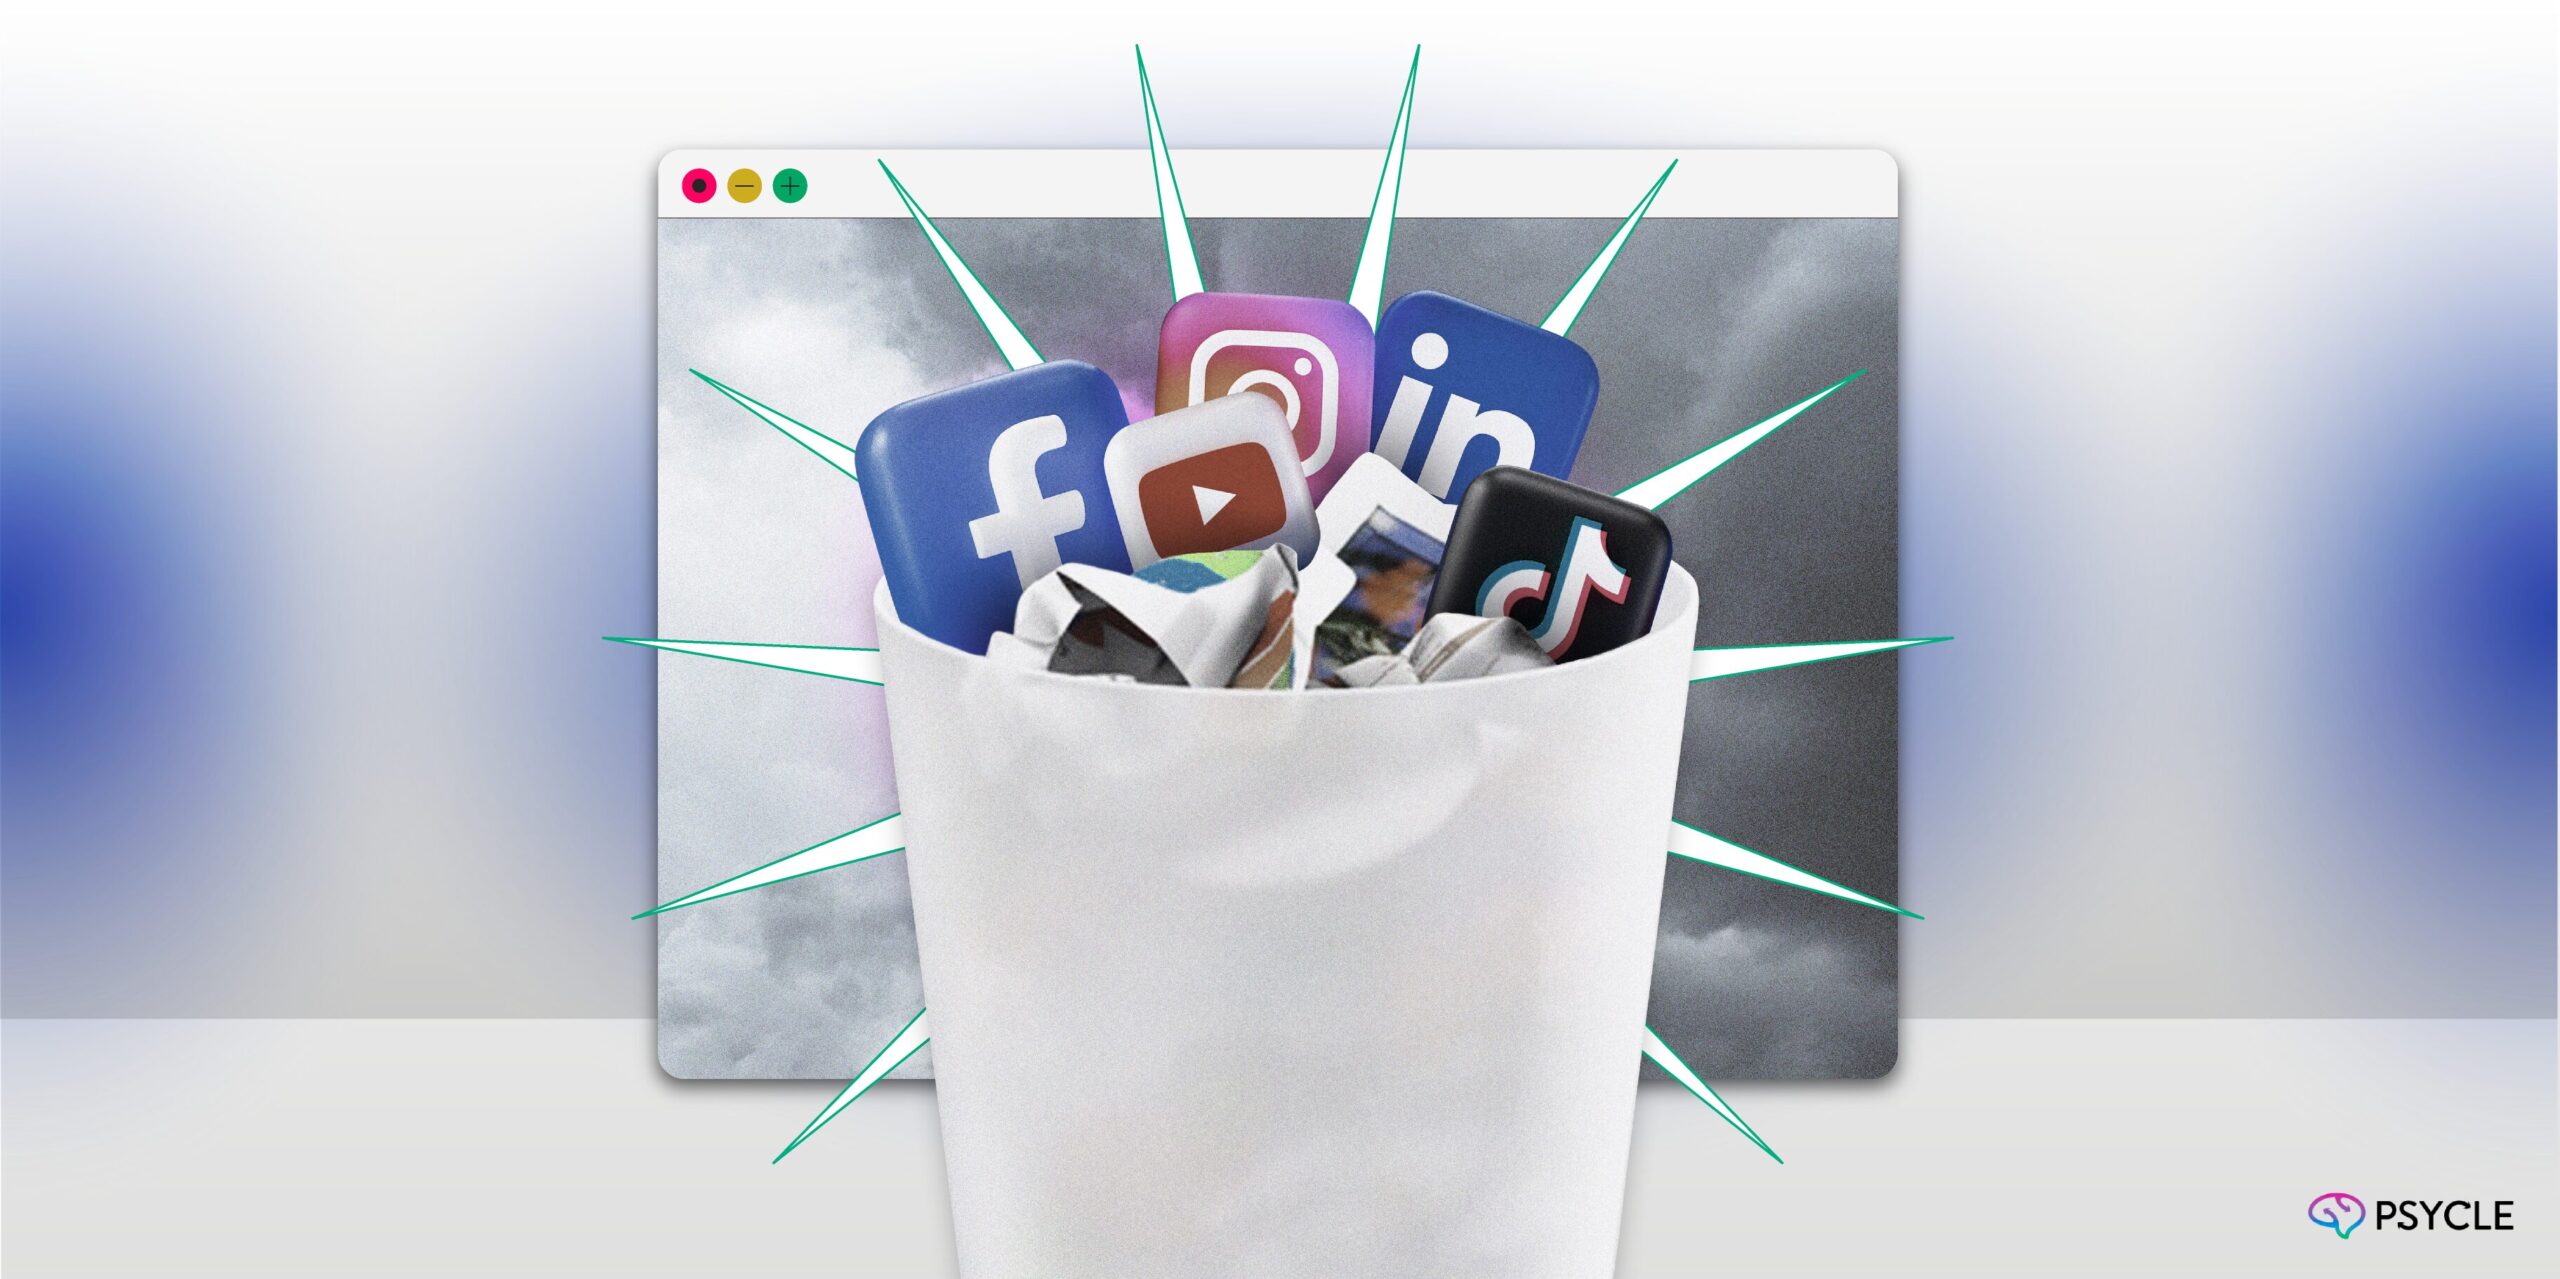 Trash bin with social media logos